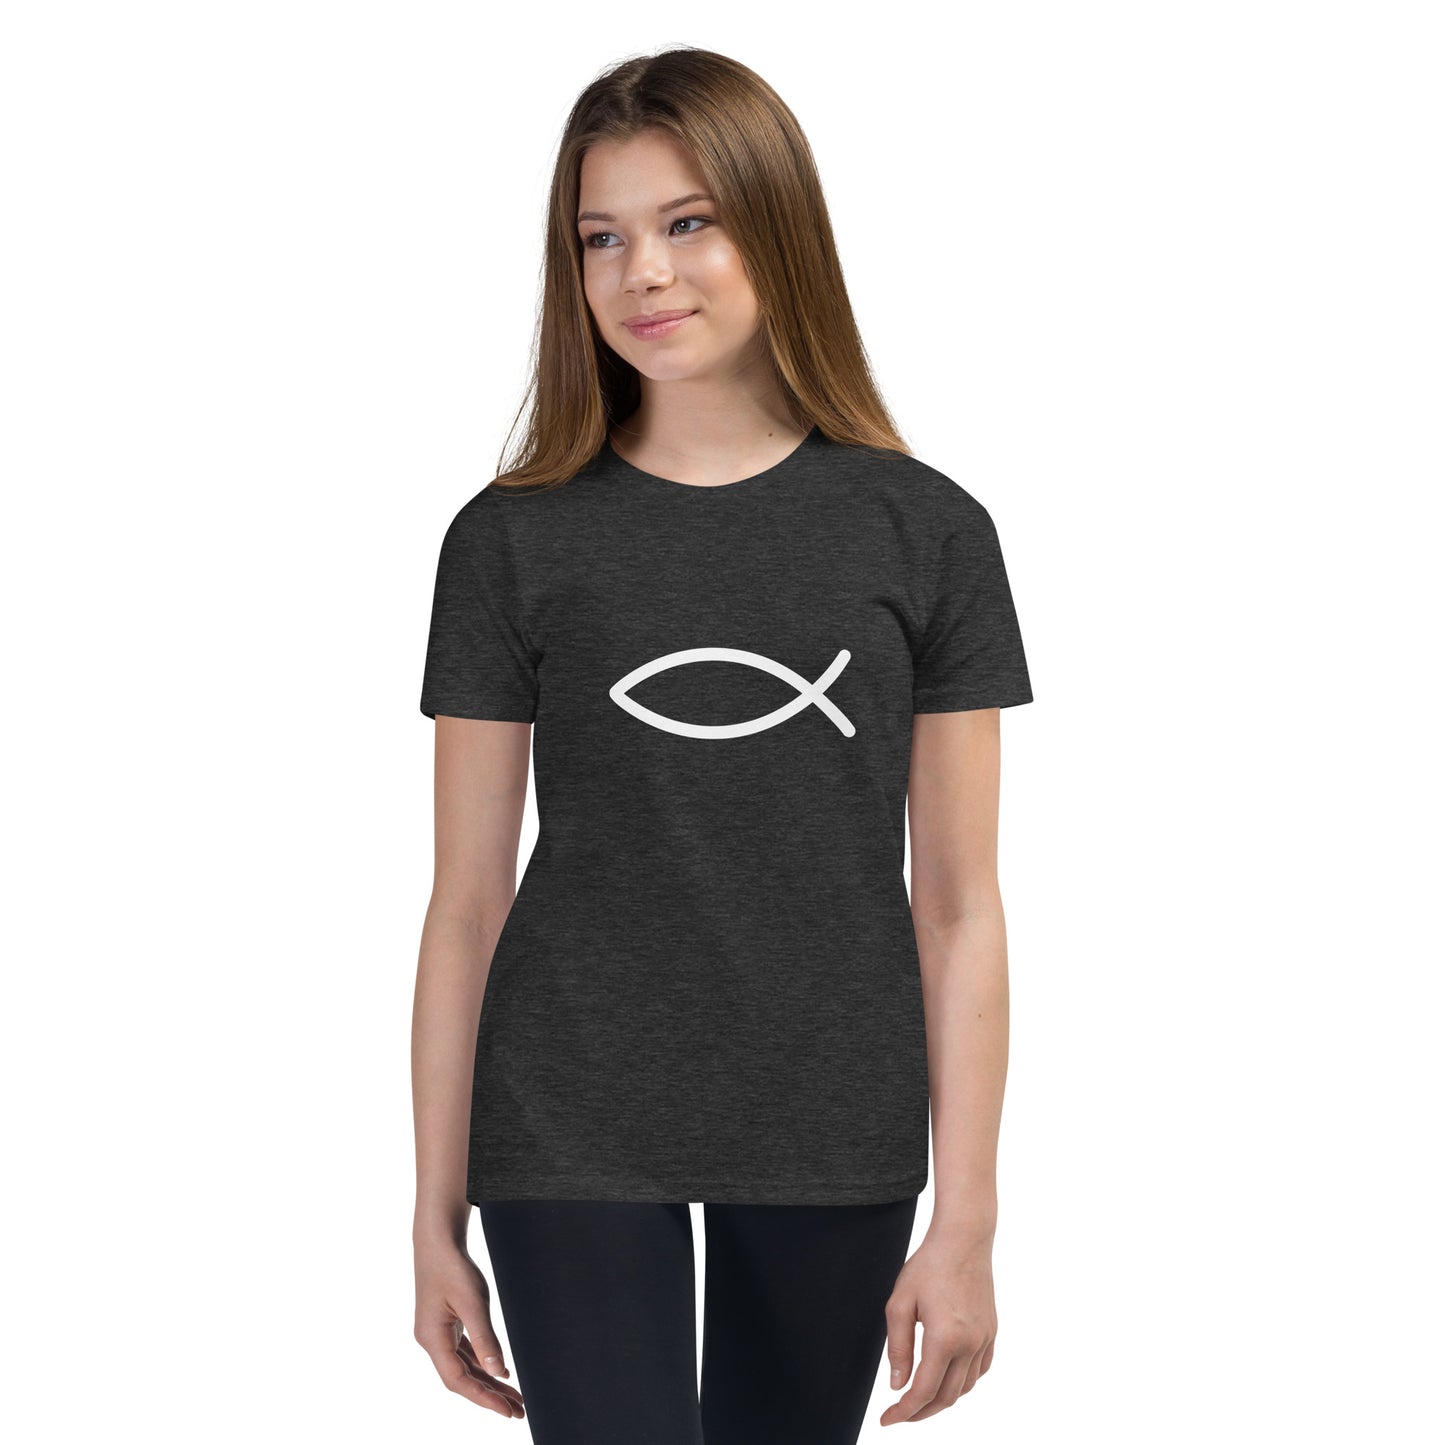 Fish Short Sleeve T-Shirt